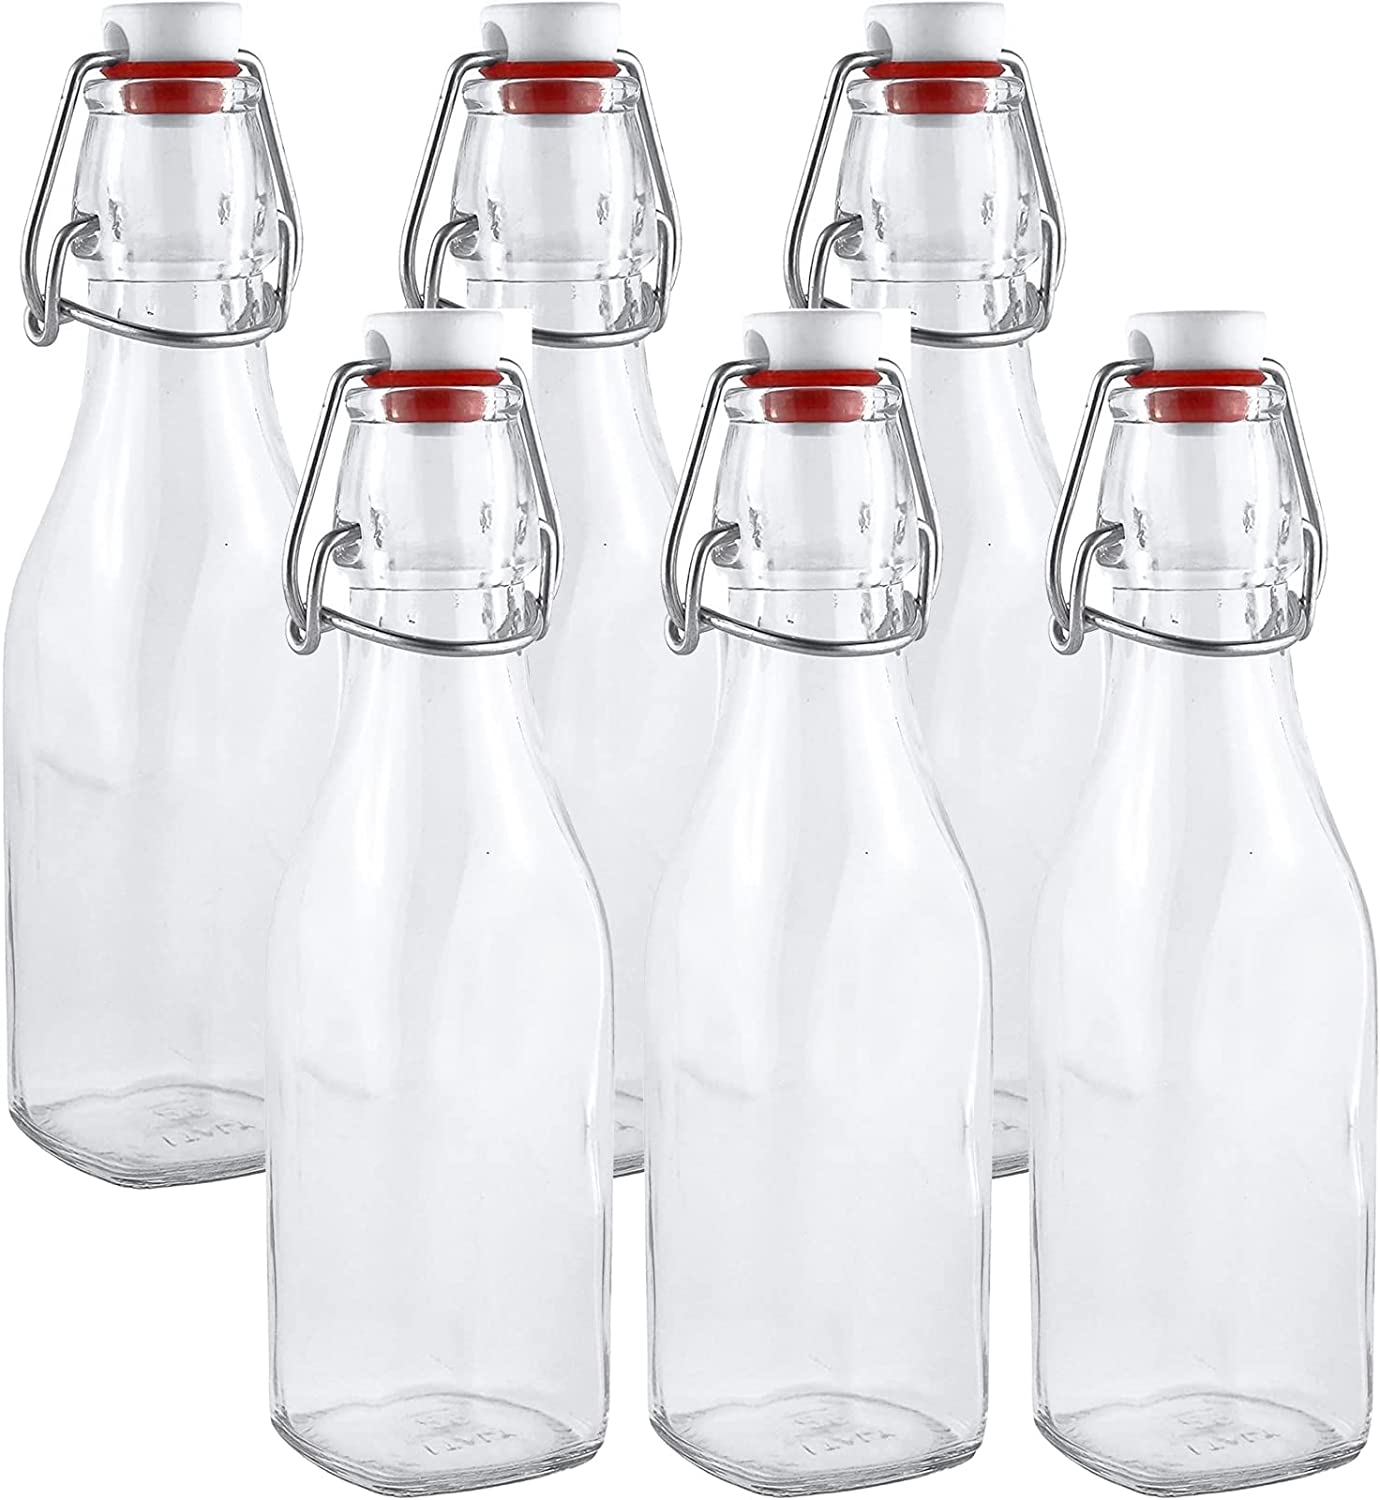 Estilo Swing Top Easy Cap Clear Glass Bottles, Round, 8.5 oz, Set of 6. Standard Size, Flip Top Glass Bottles to store home